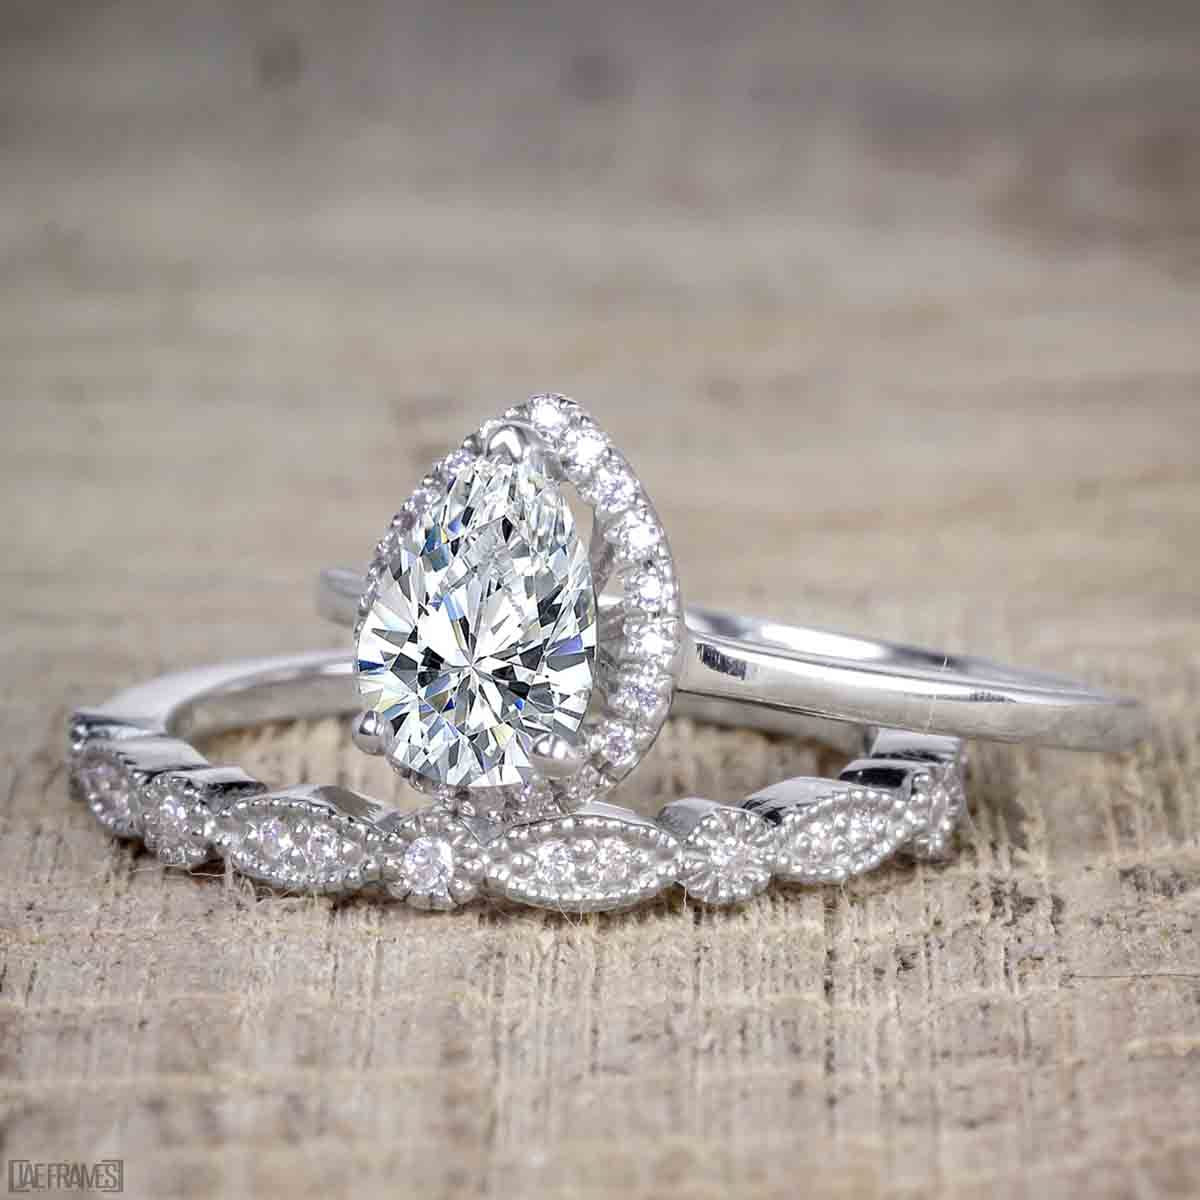 Buy Vintage Engagement Ring Vintage 1950's 14k White Gold Diamond Wedding  Ring Set Online in India - Etsy